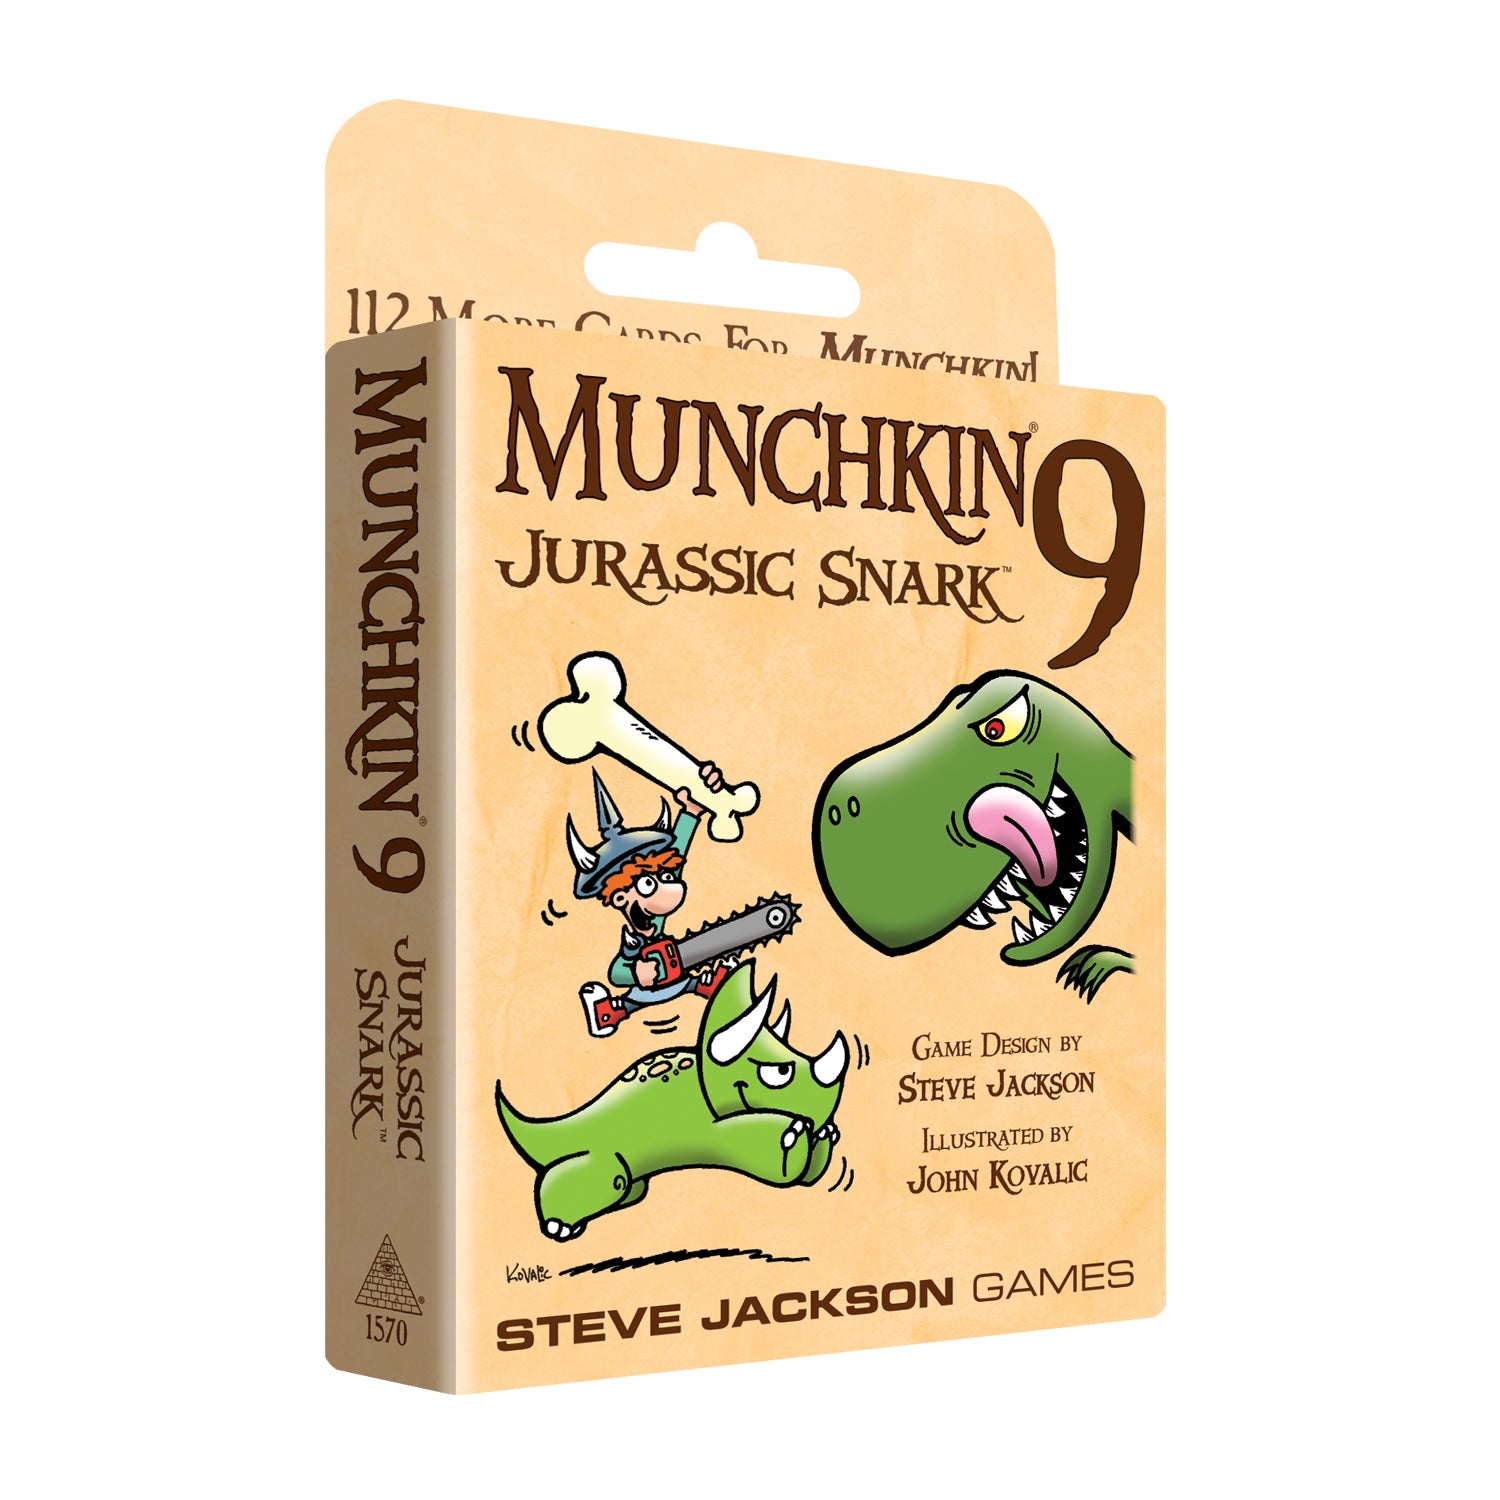 Munchkin 9 – Jurassic Snark